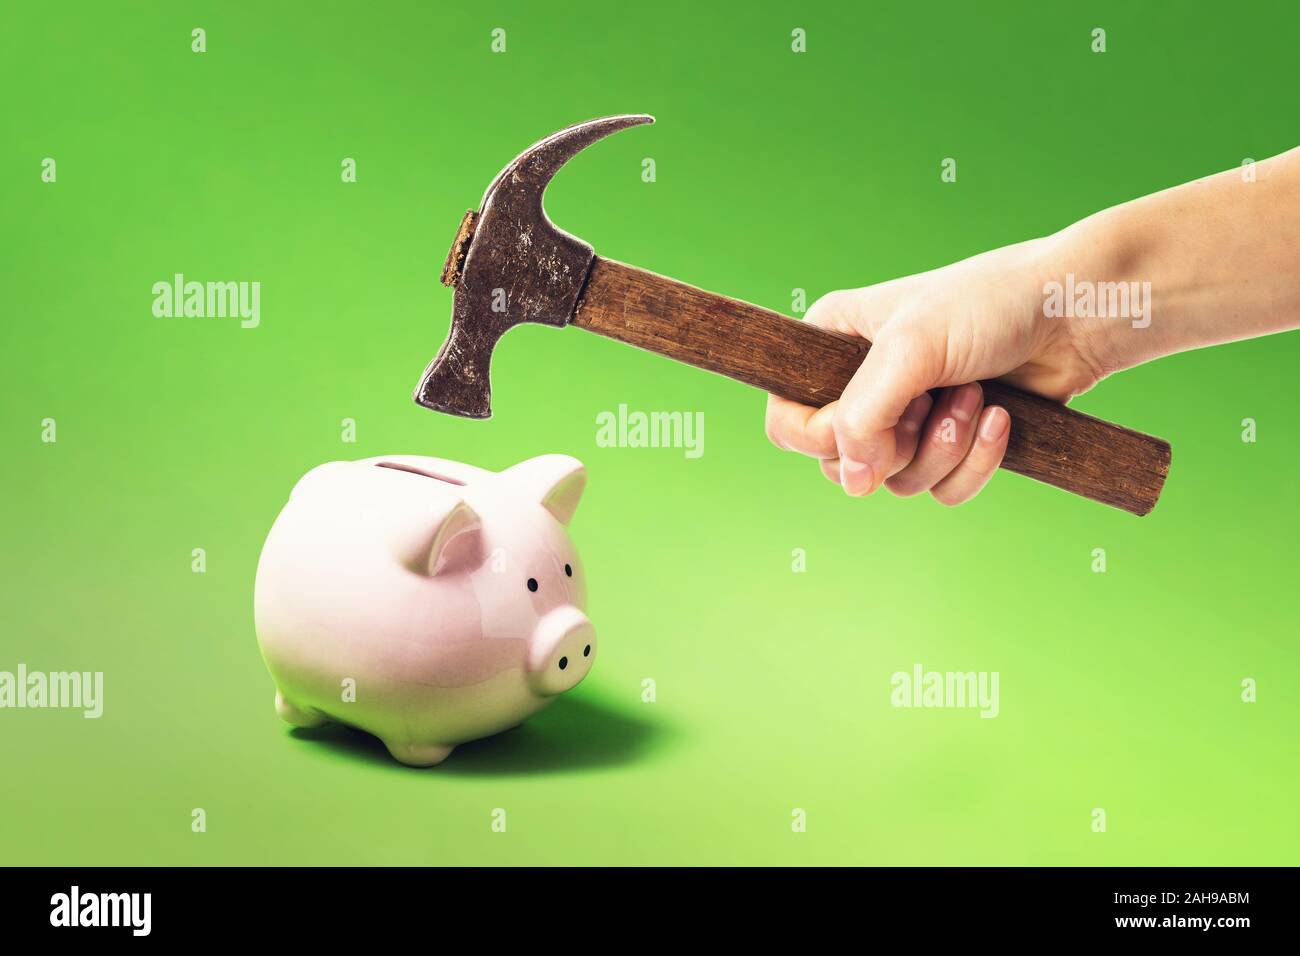 Hand with a hammer smashes a piggy bank. Money shortage concept Stock Photo